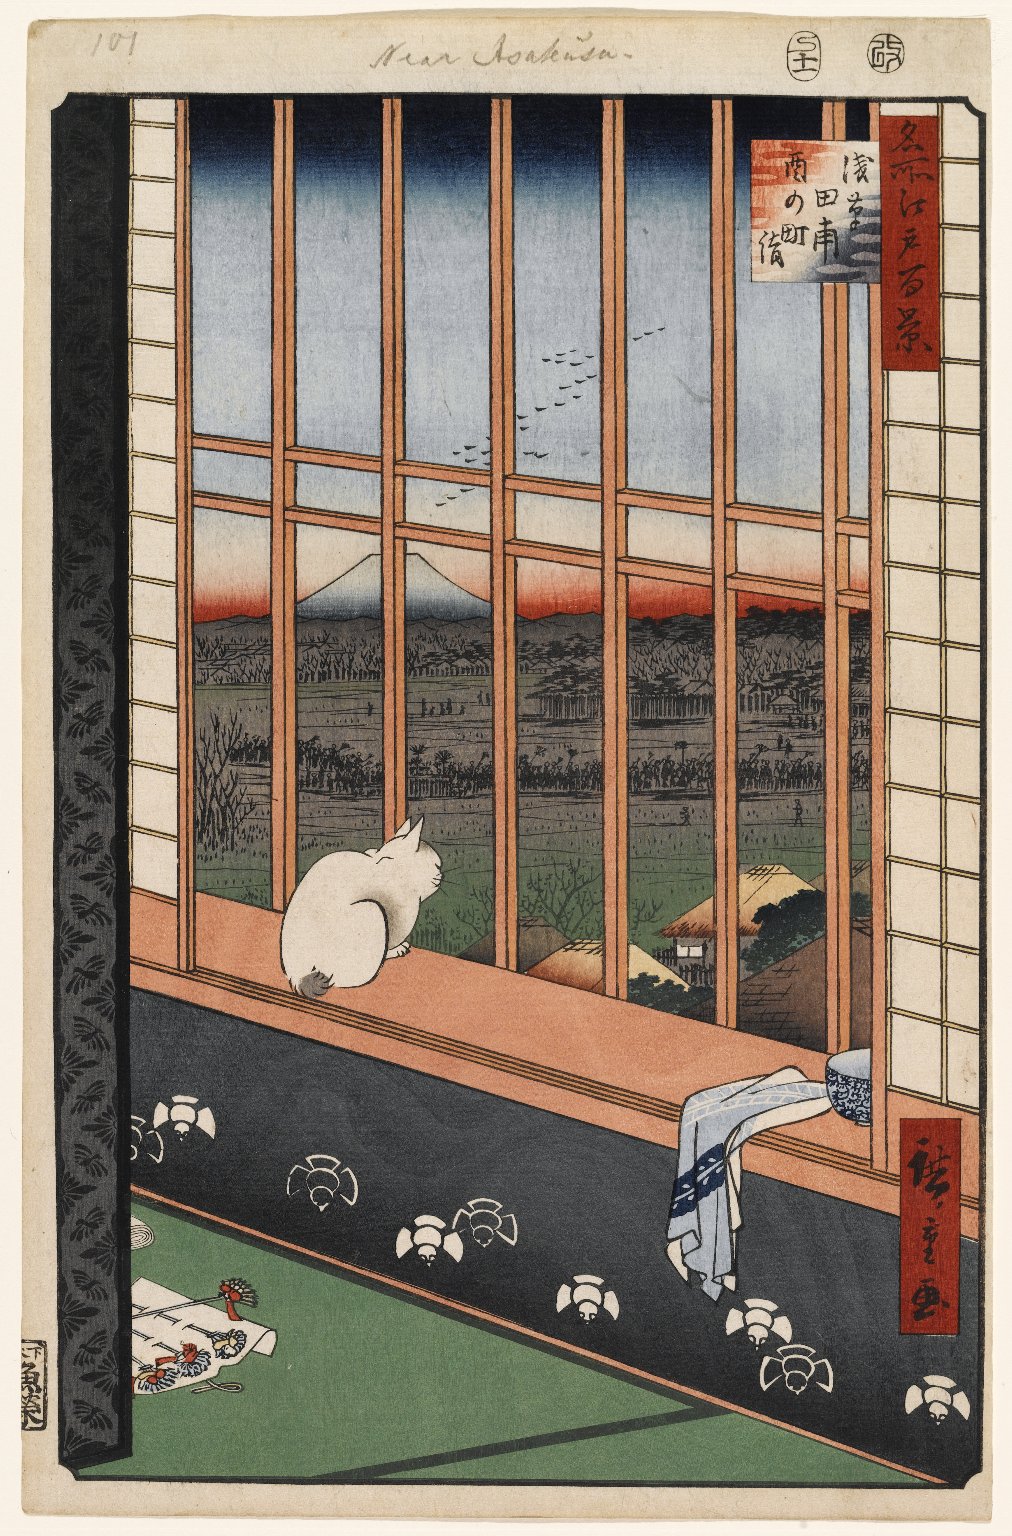 Пиринчана поља Асакуса и Ториномаши фестивал by  Hiroshige - 1857. - 36 x 23.5 cm 